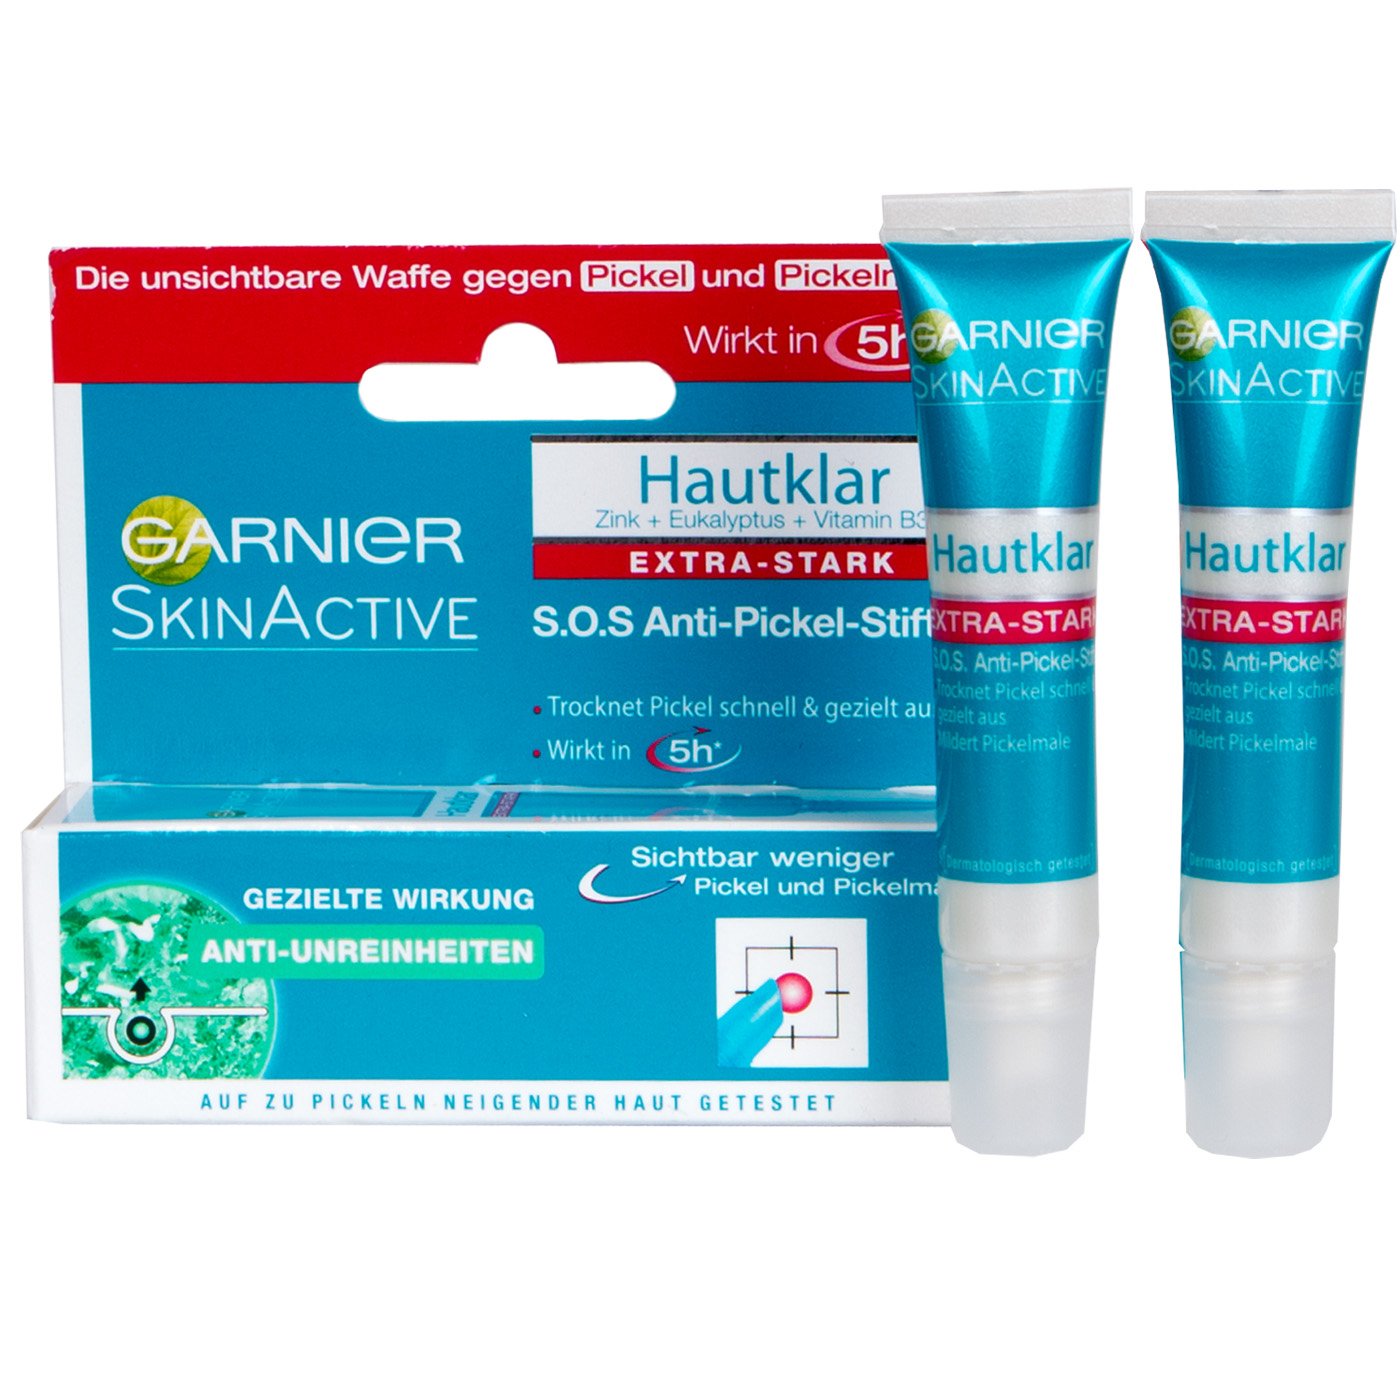 Маска от прыщей отзывы. Garnier SKINACTIVE Hautklar. Garnier Skin Active Hautklar. Garnier Skin Active Pure SOS. Garnier SKINACTIVE Hautklar 3in1 Tonerde инструкция.